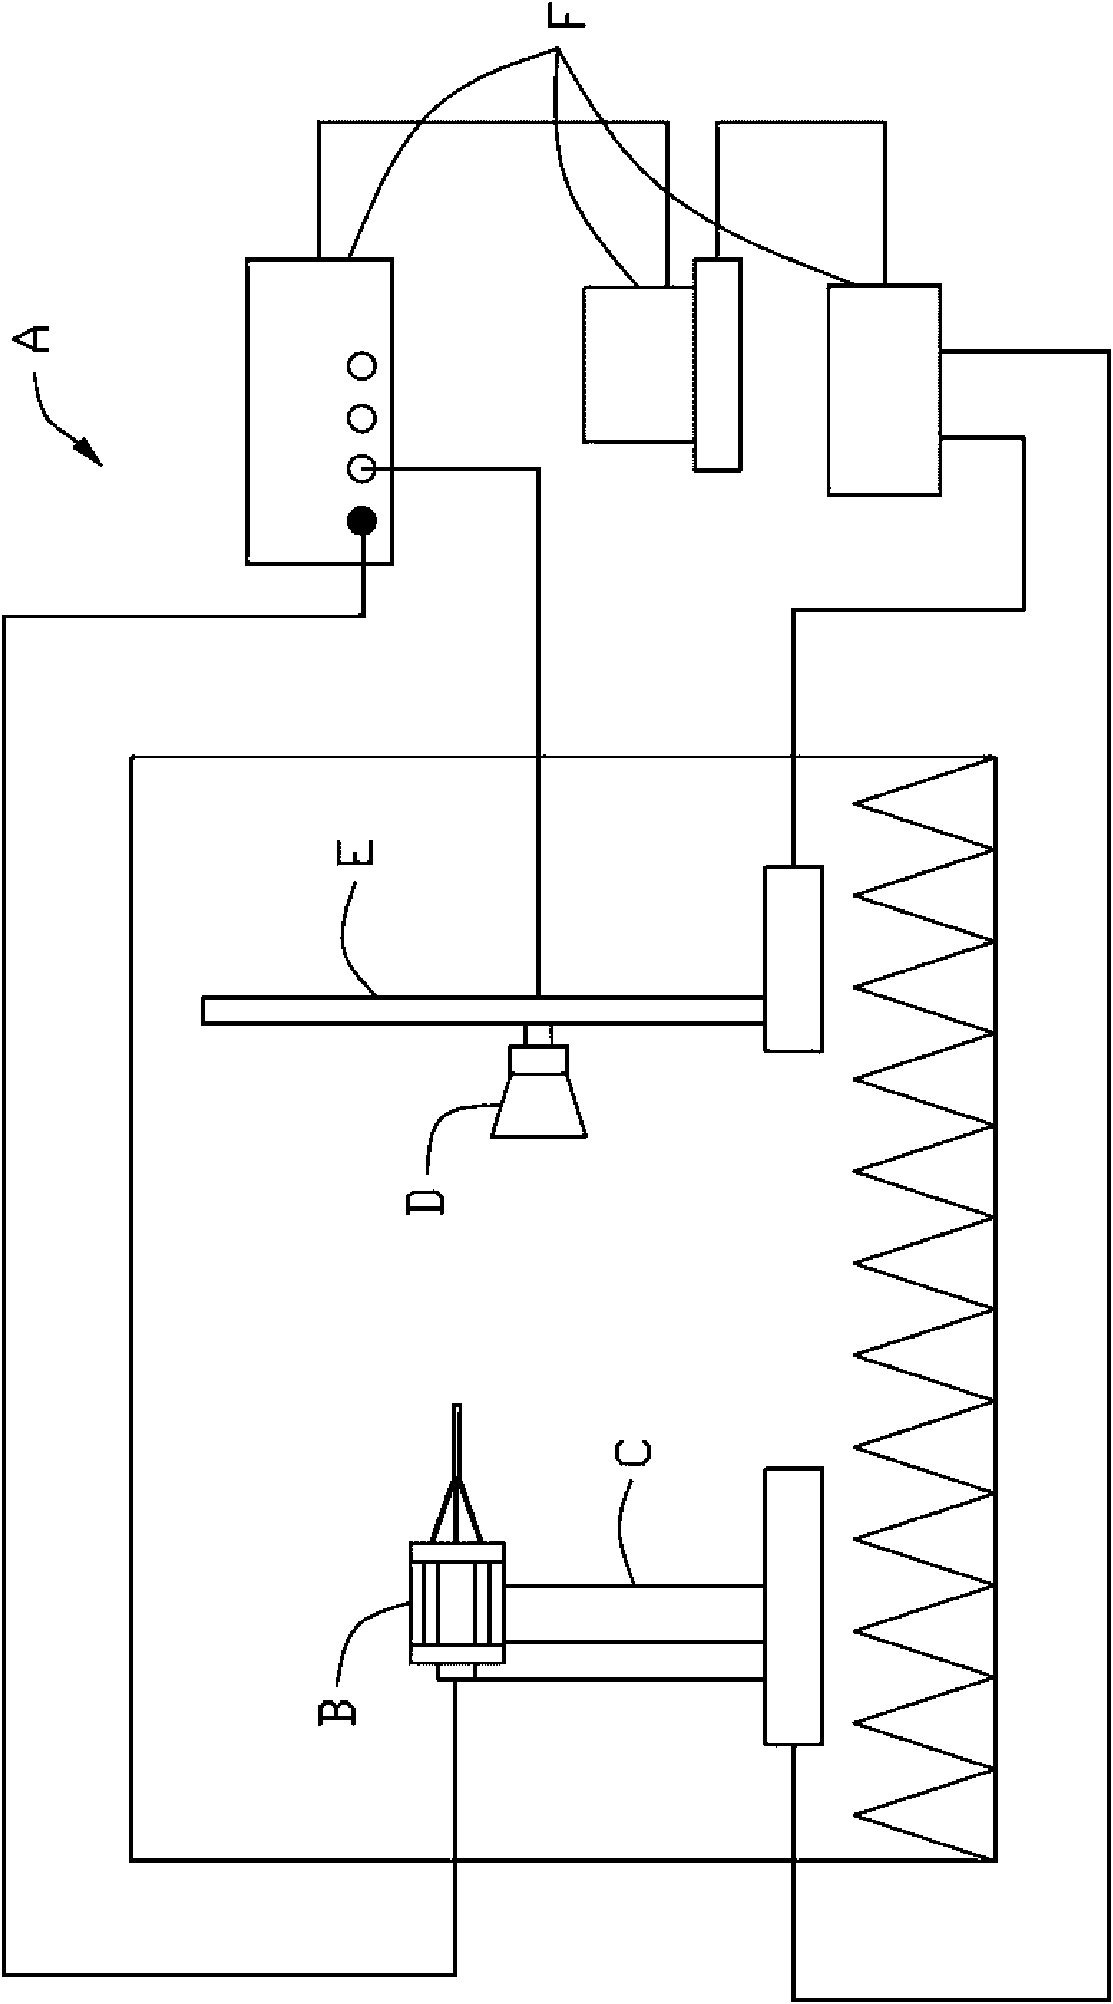 Antenna regulating device